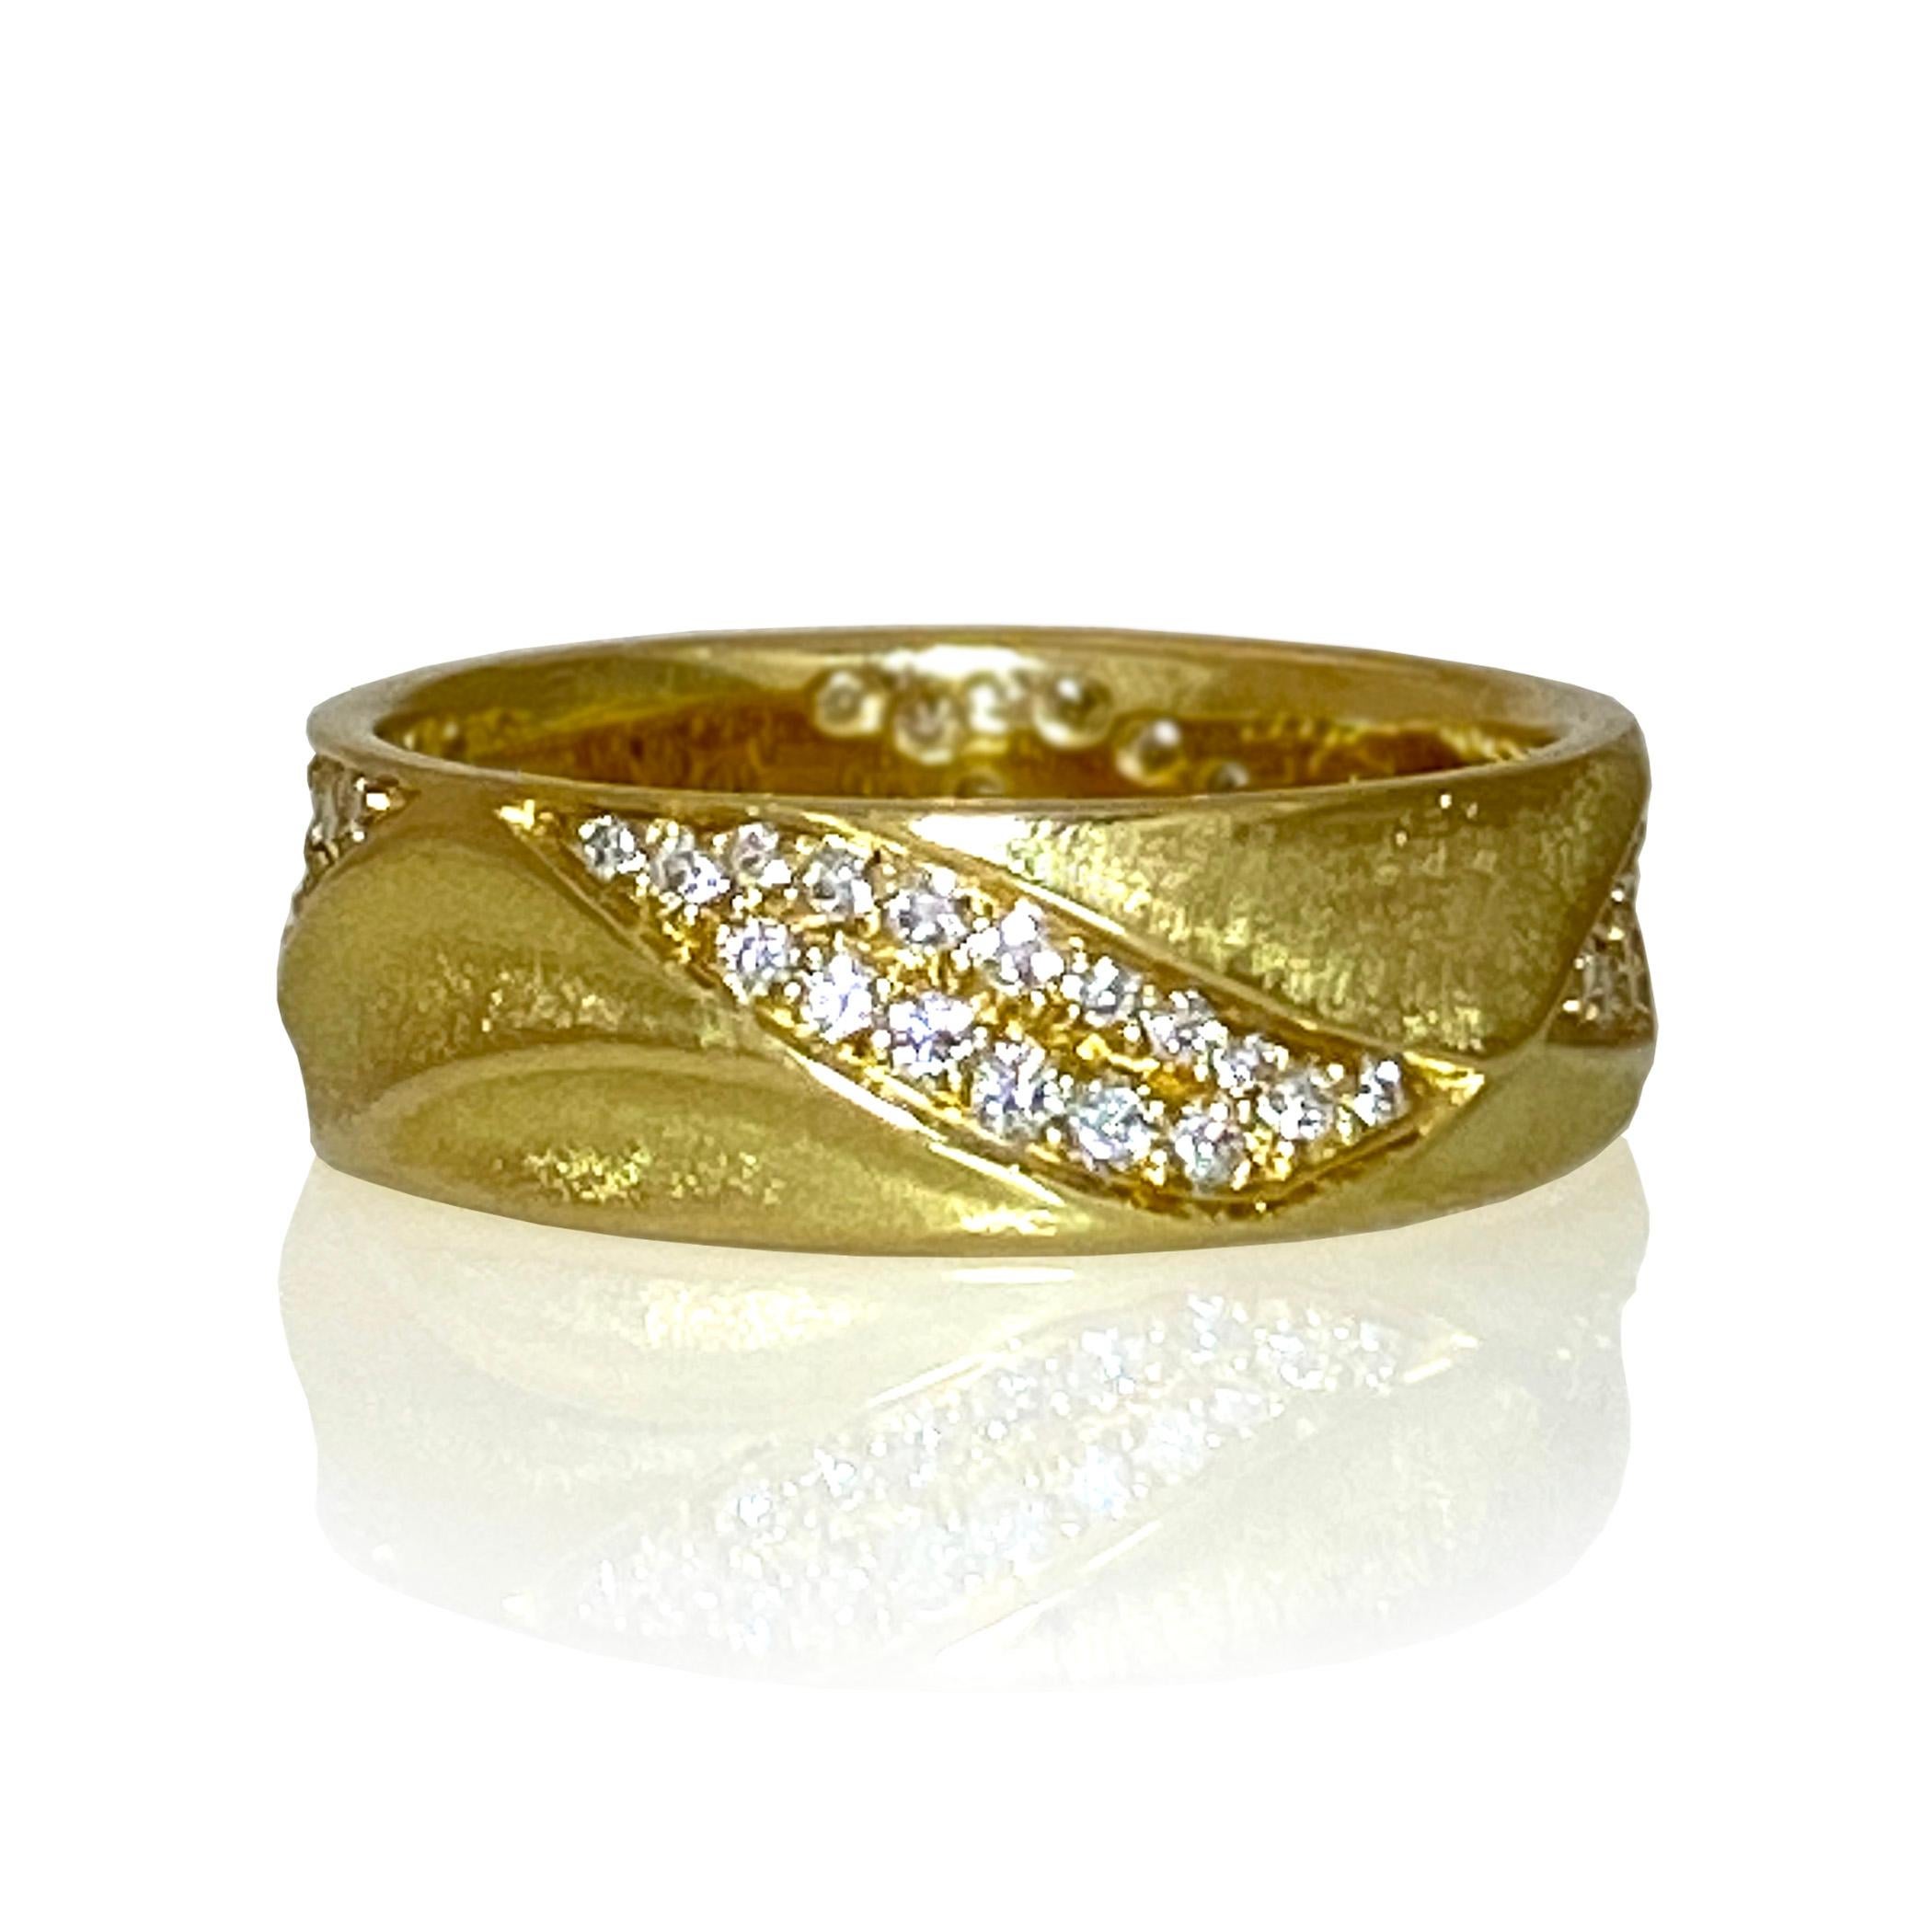 For Sale:  Large 18 Karat Yellow Gold Eternal Dune Band Ring with Diamonds from Keiko Mita 2